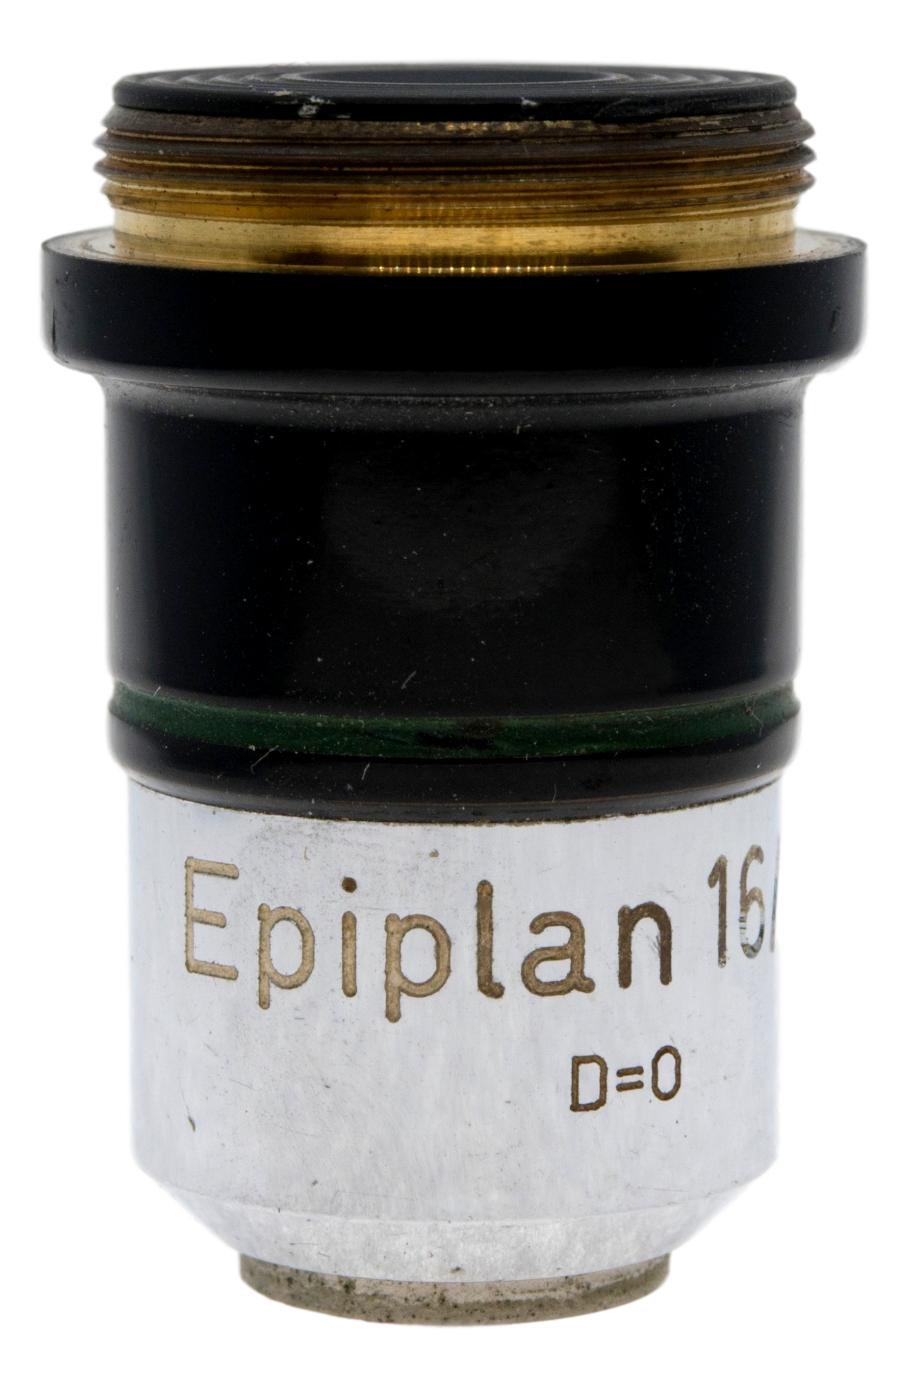 Zeiss 16x Epiplan Objective